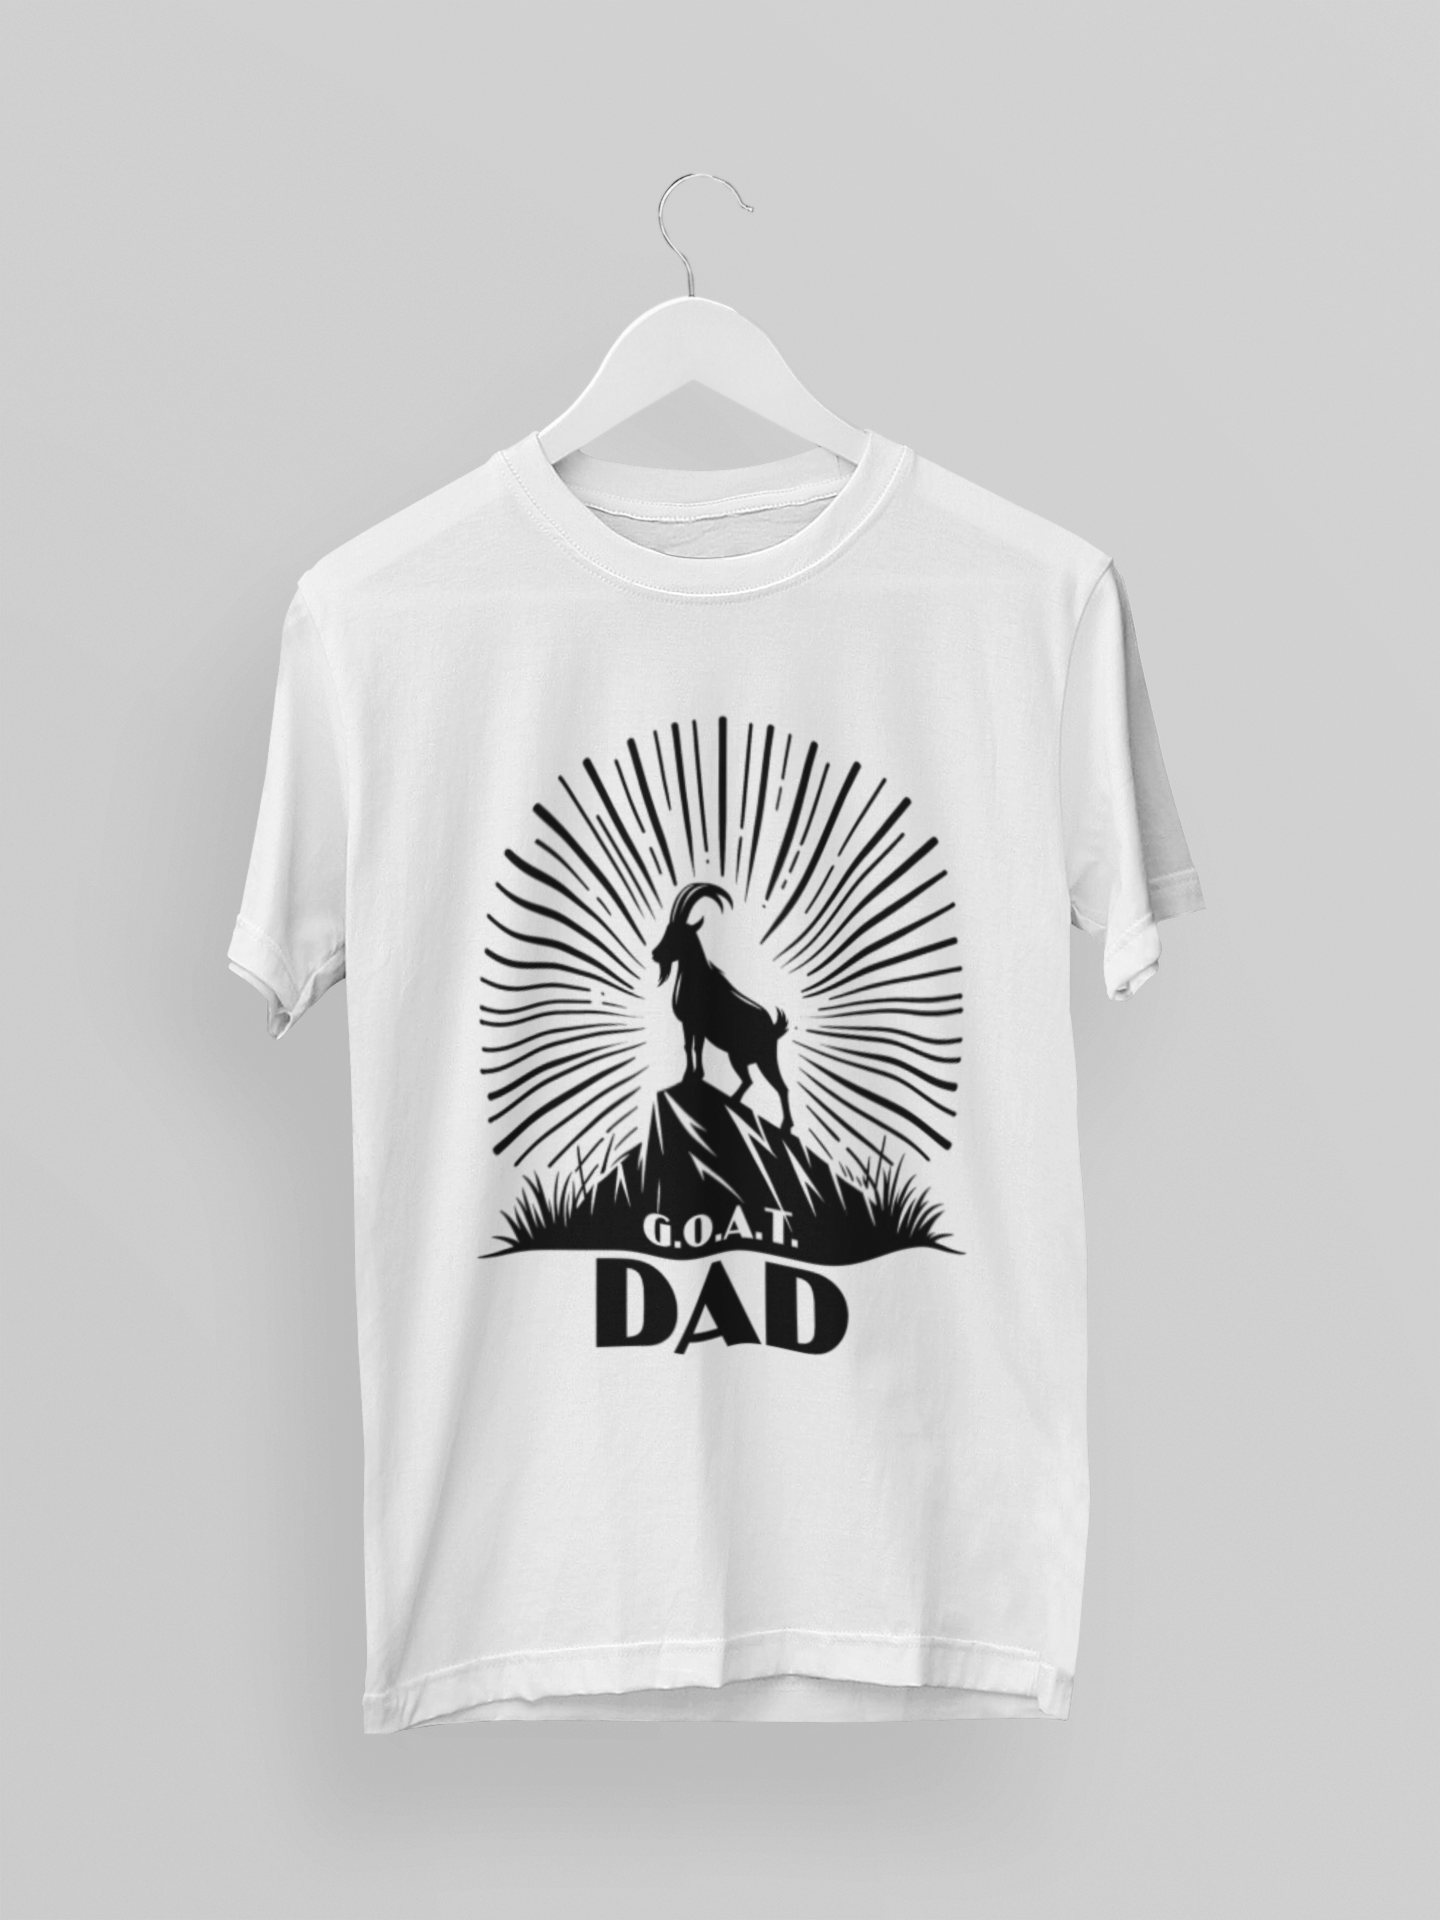 GOAT DAD T-shirt